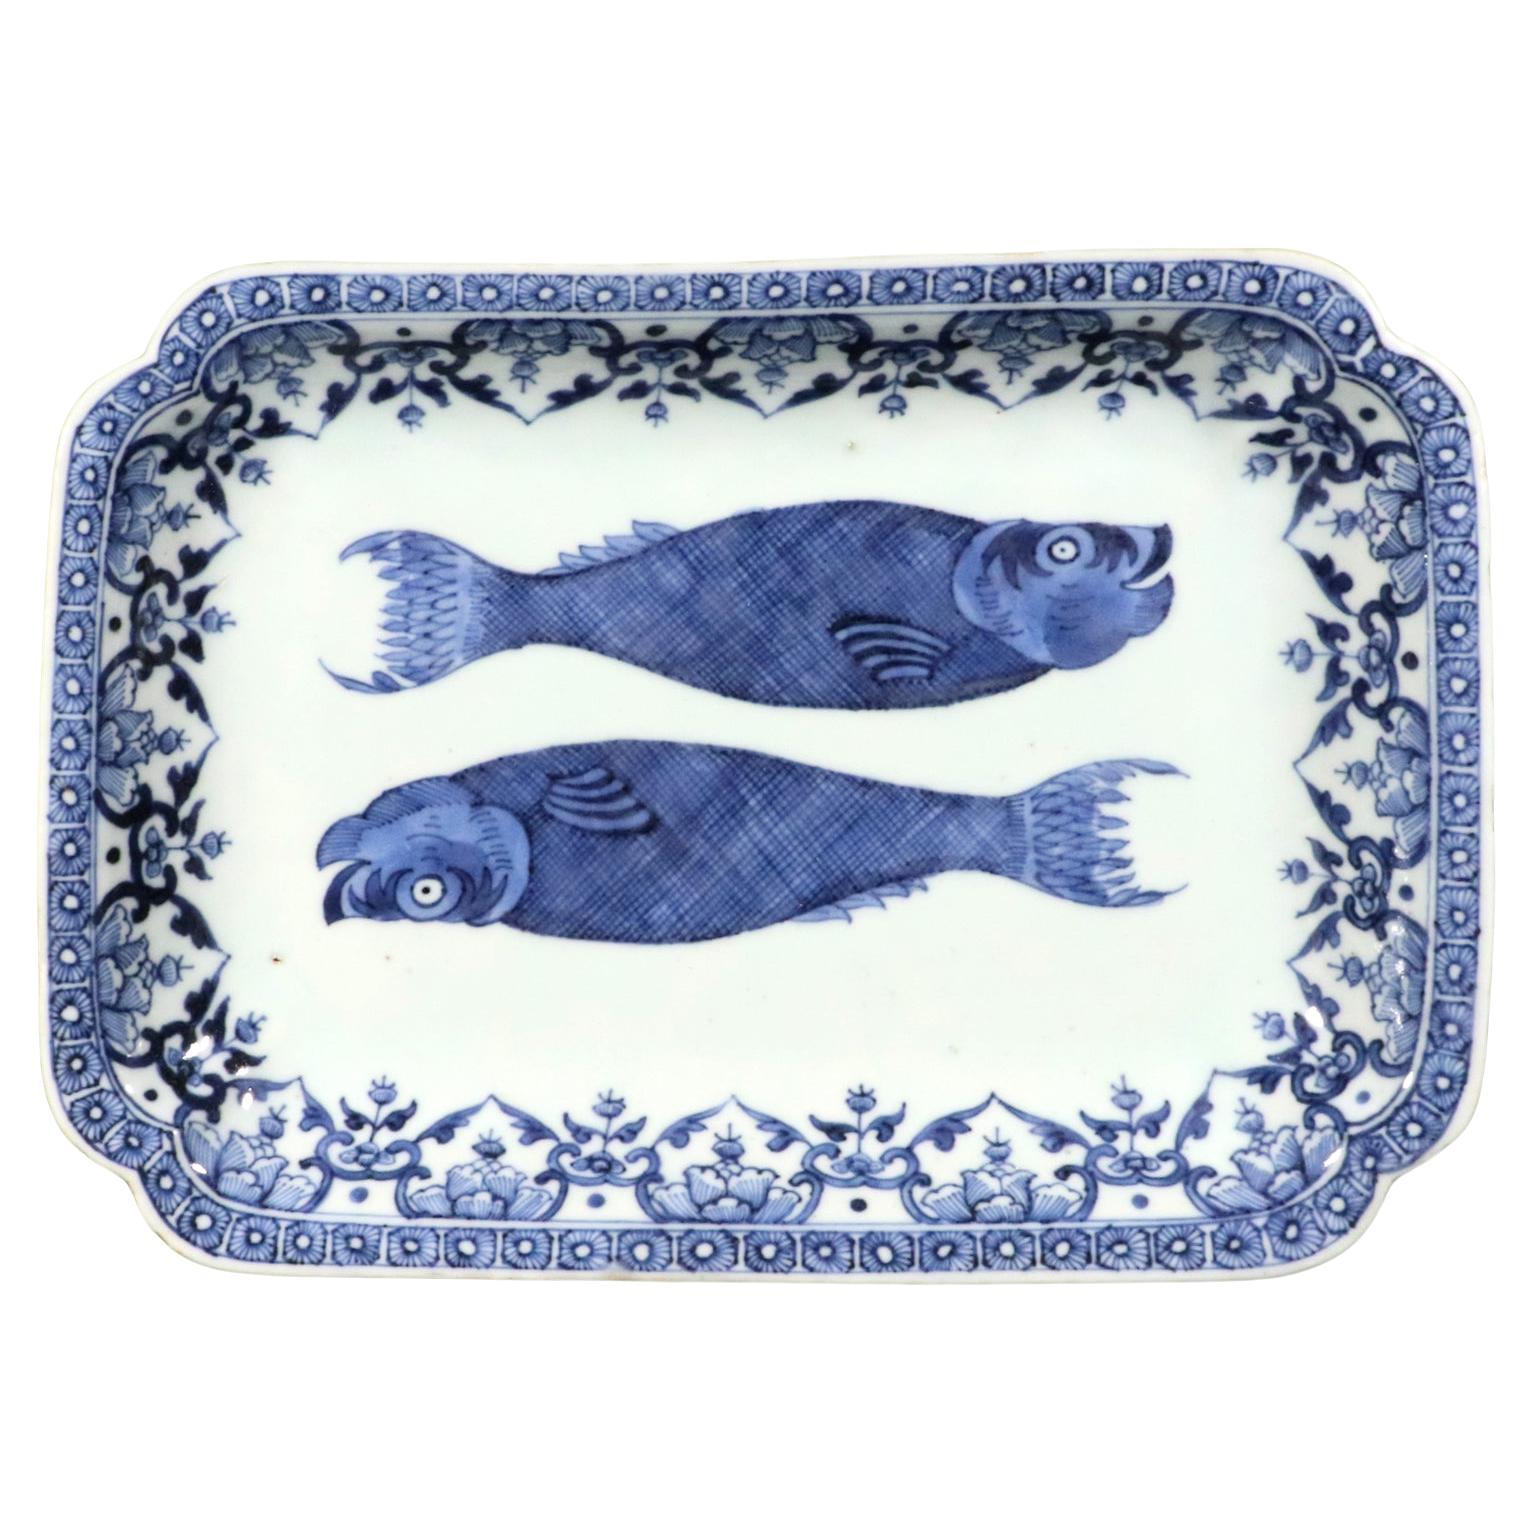 Chinese Export Porcelain Rare Dutch-Market Blue & White Double Herring Dish